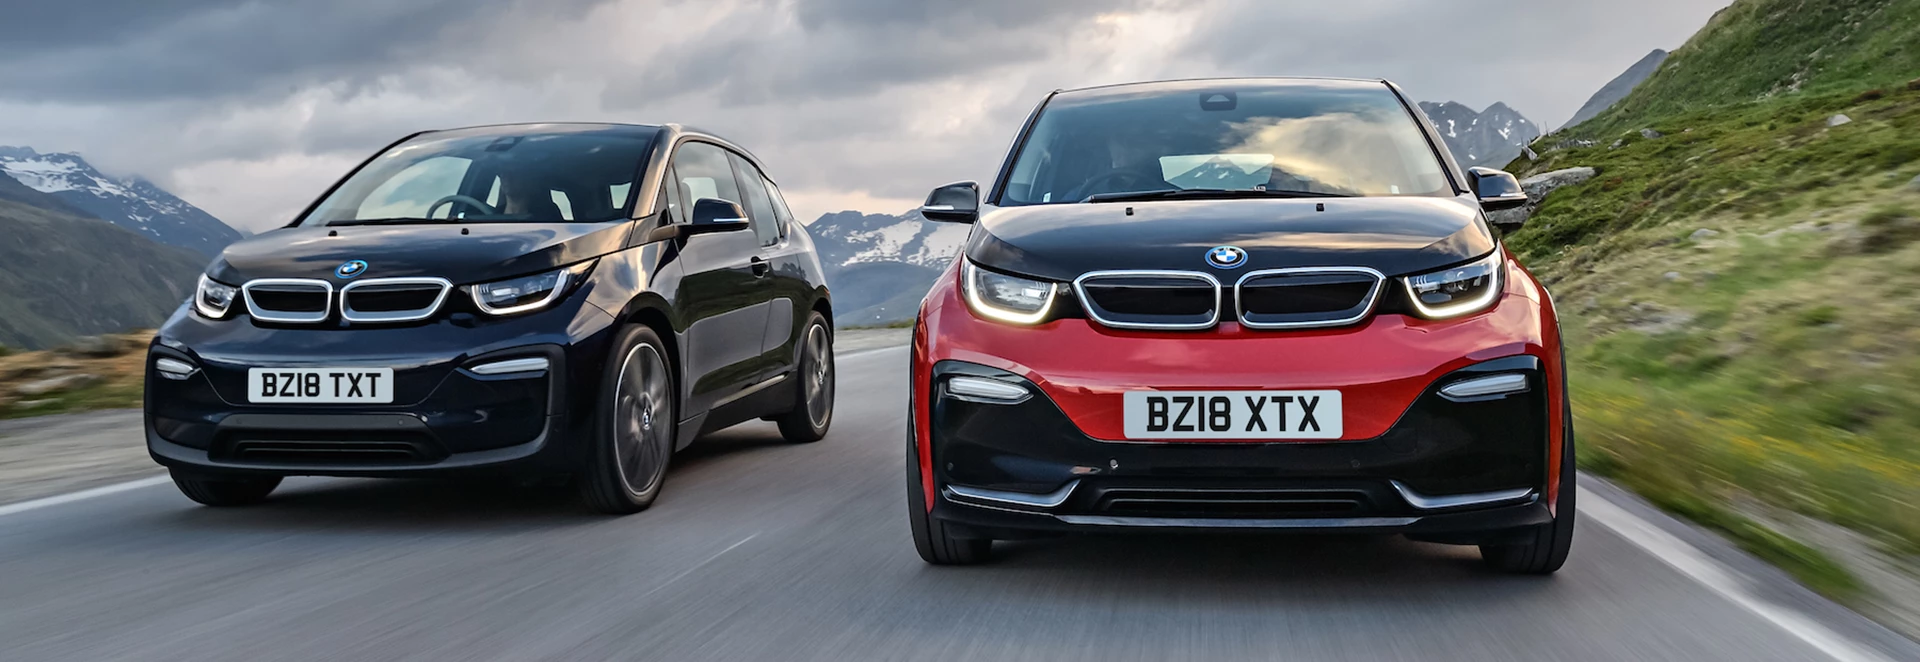 BMW bucks market trends to grow sales in first half of 2019